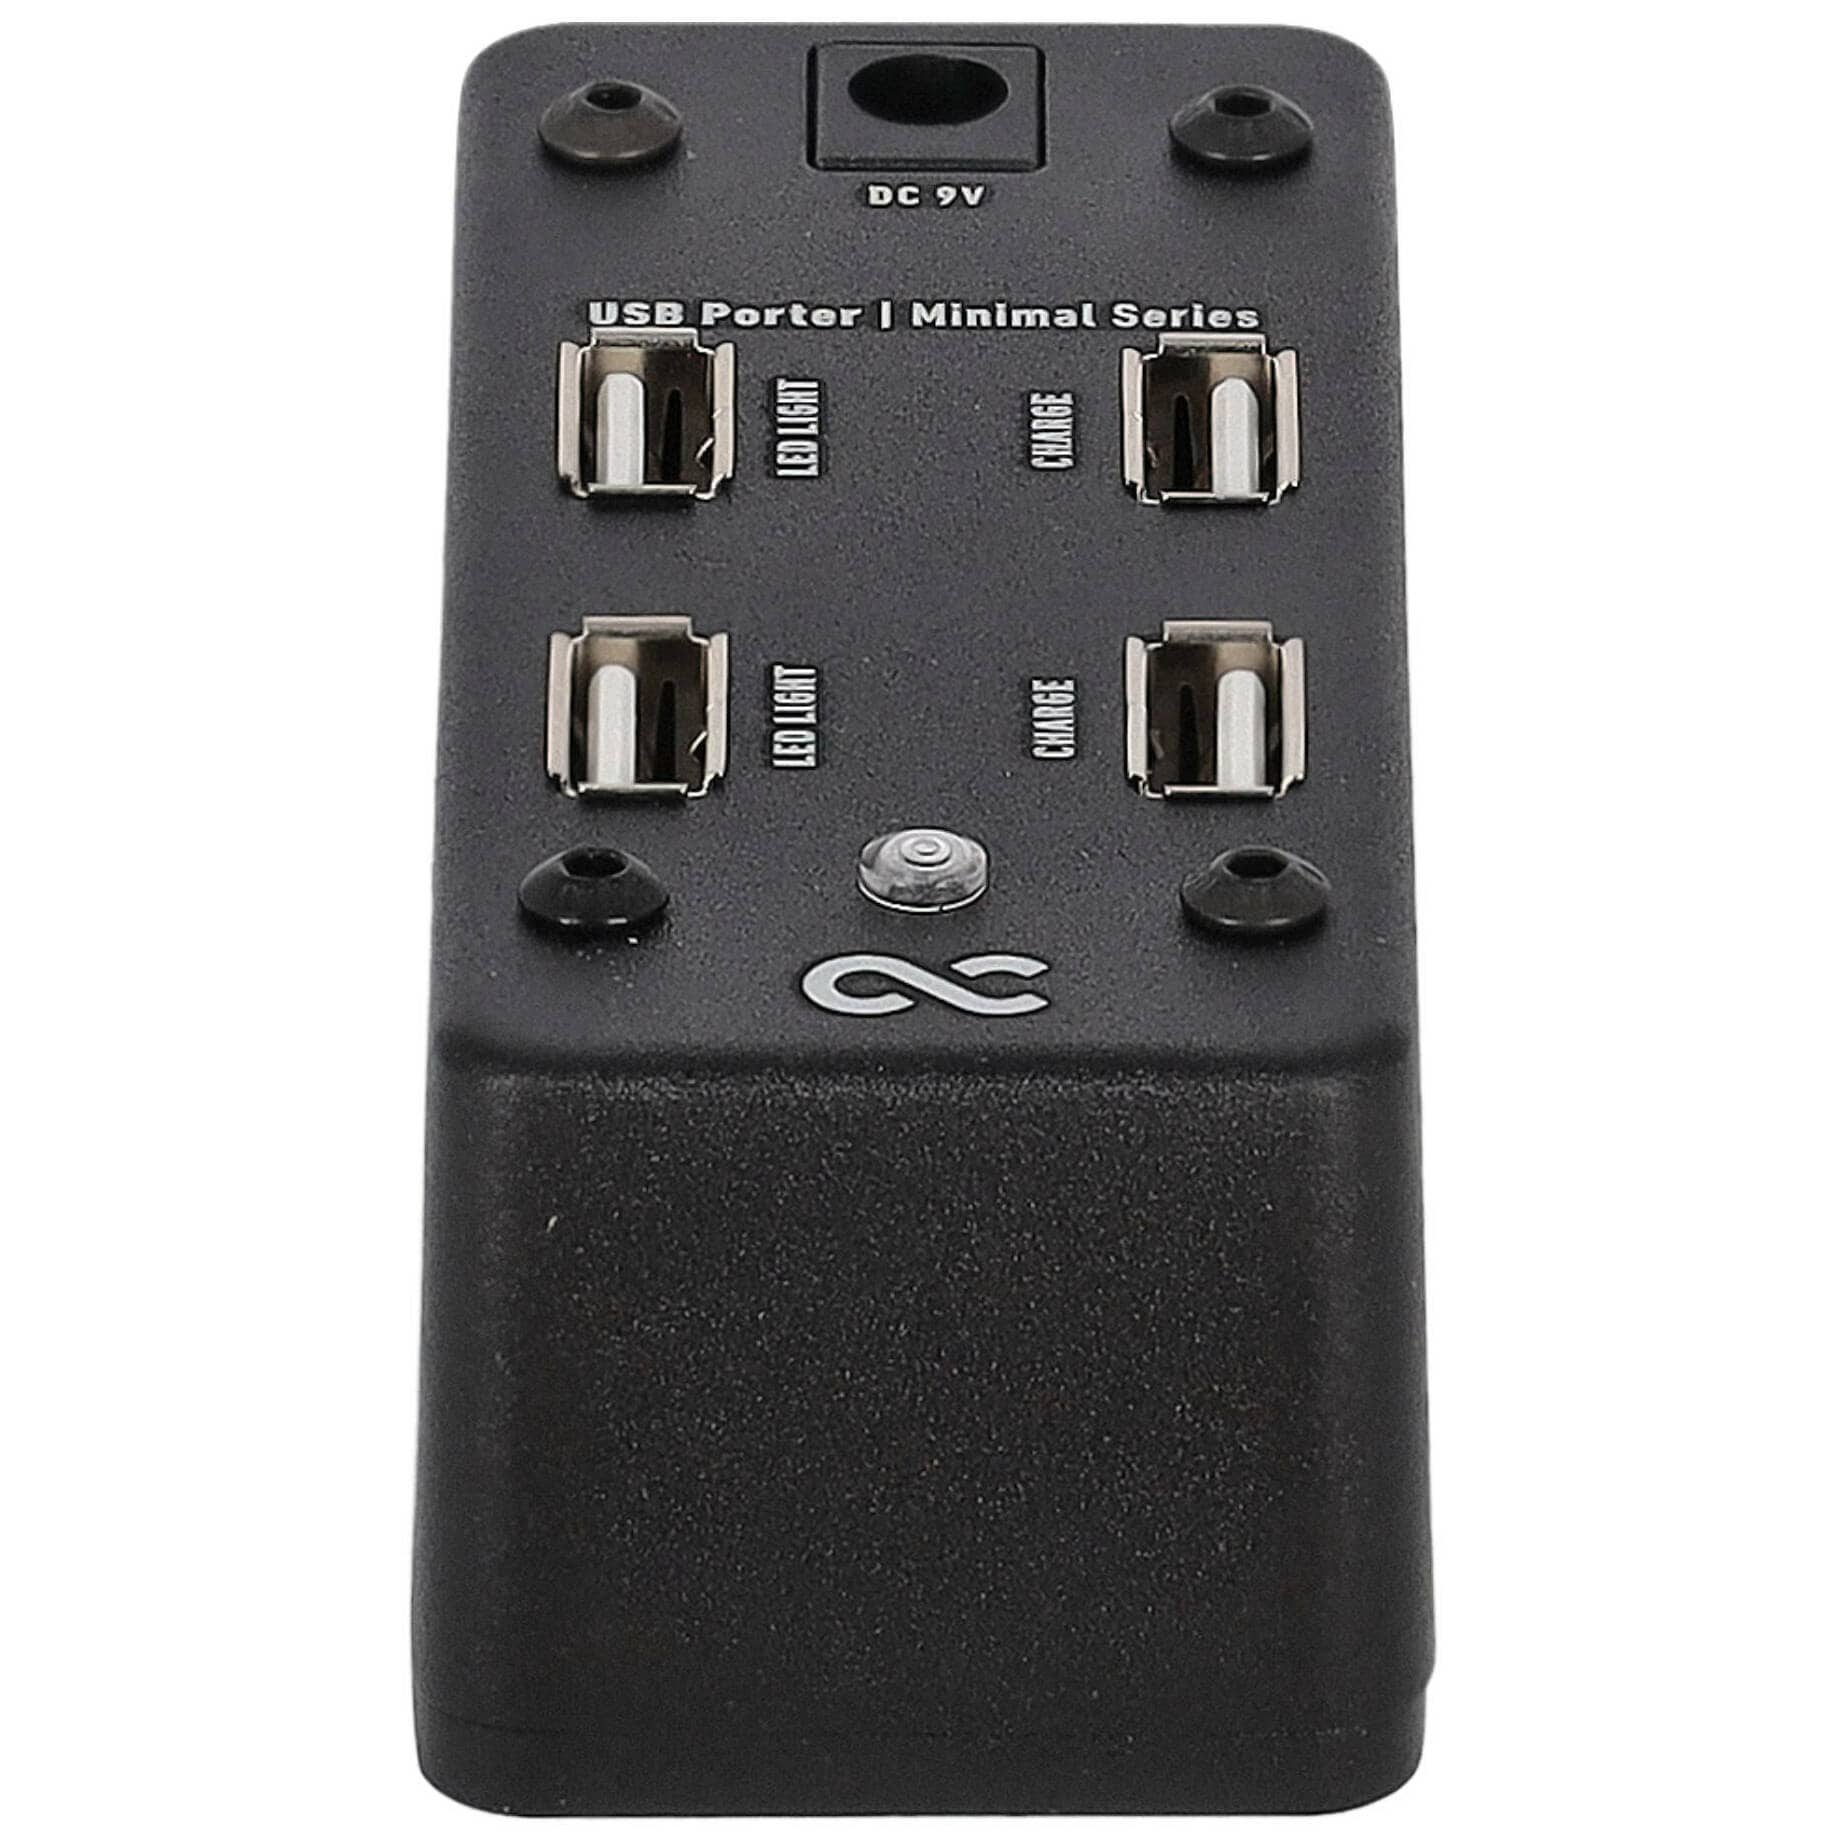 One Control Minimal Series USB Porter 1